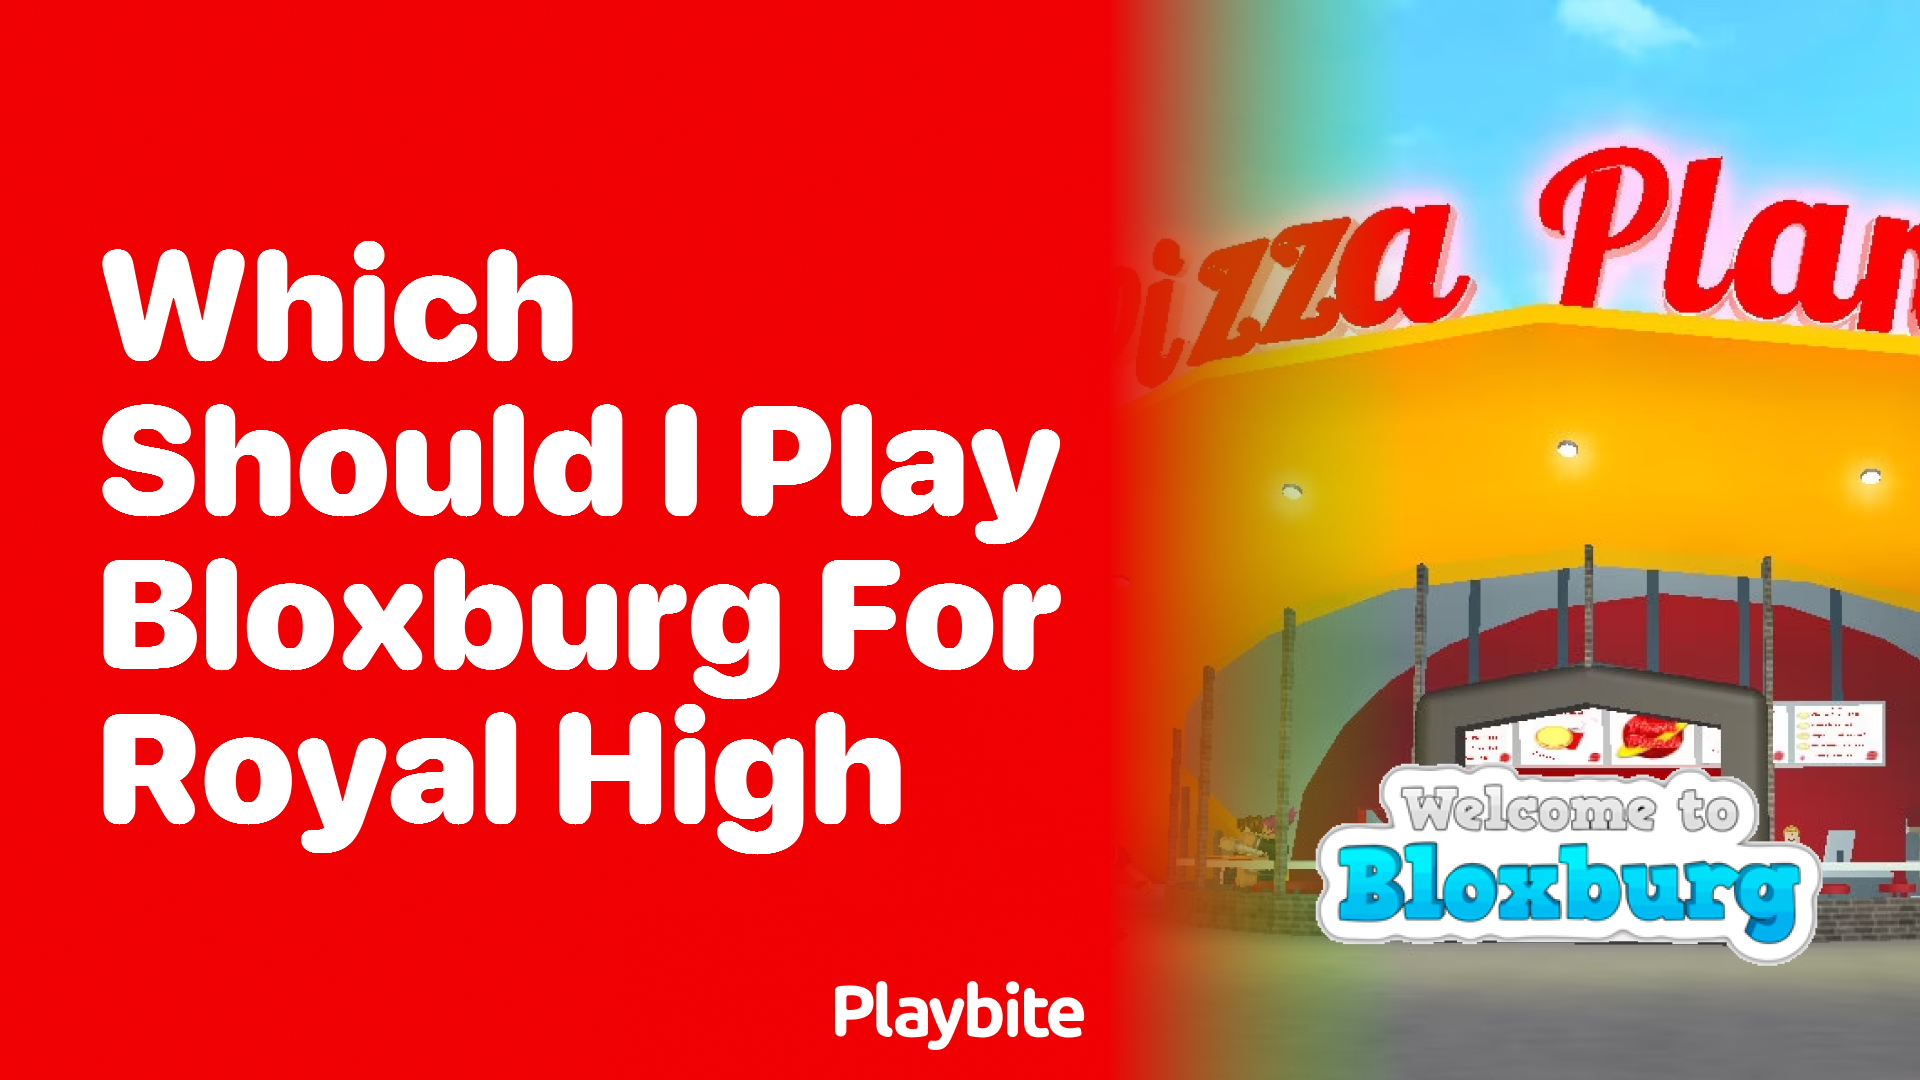 Which Should I Play: Bloxburg or Royal High?